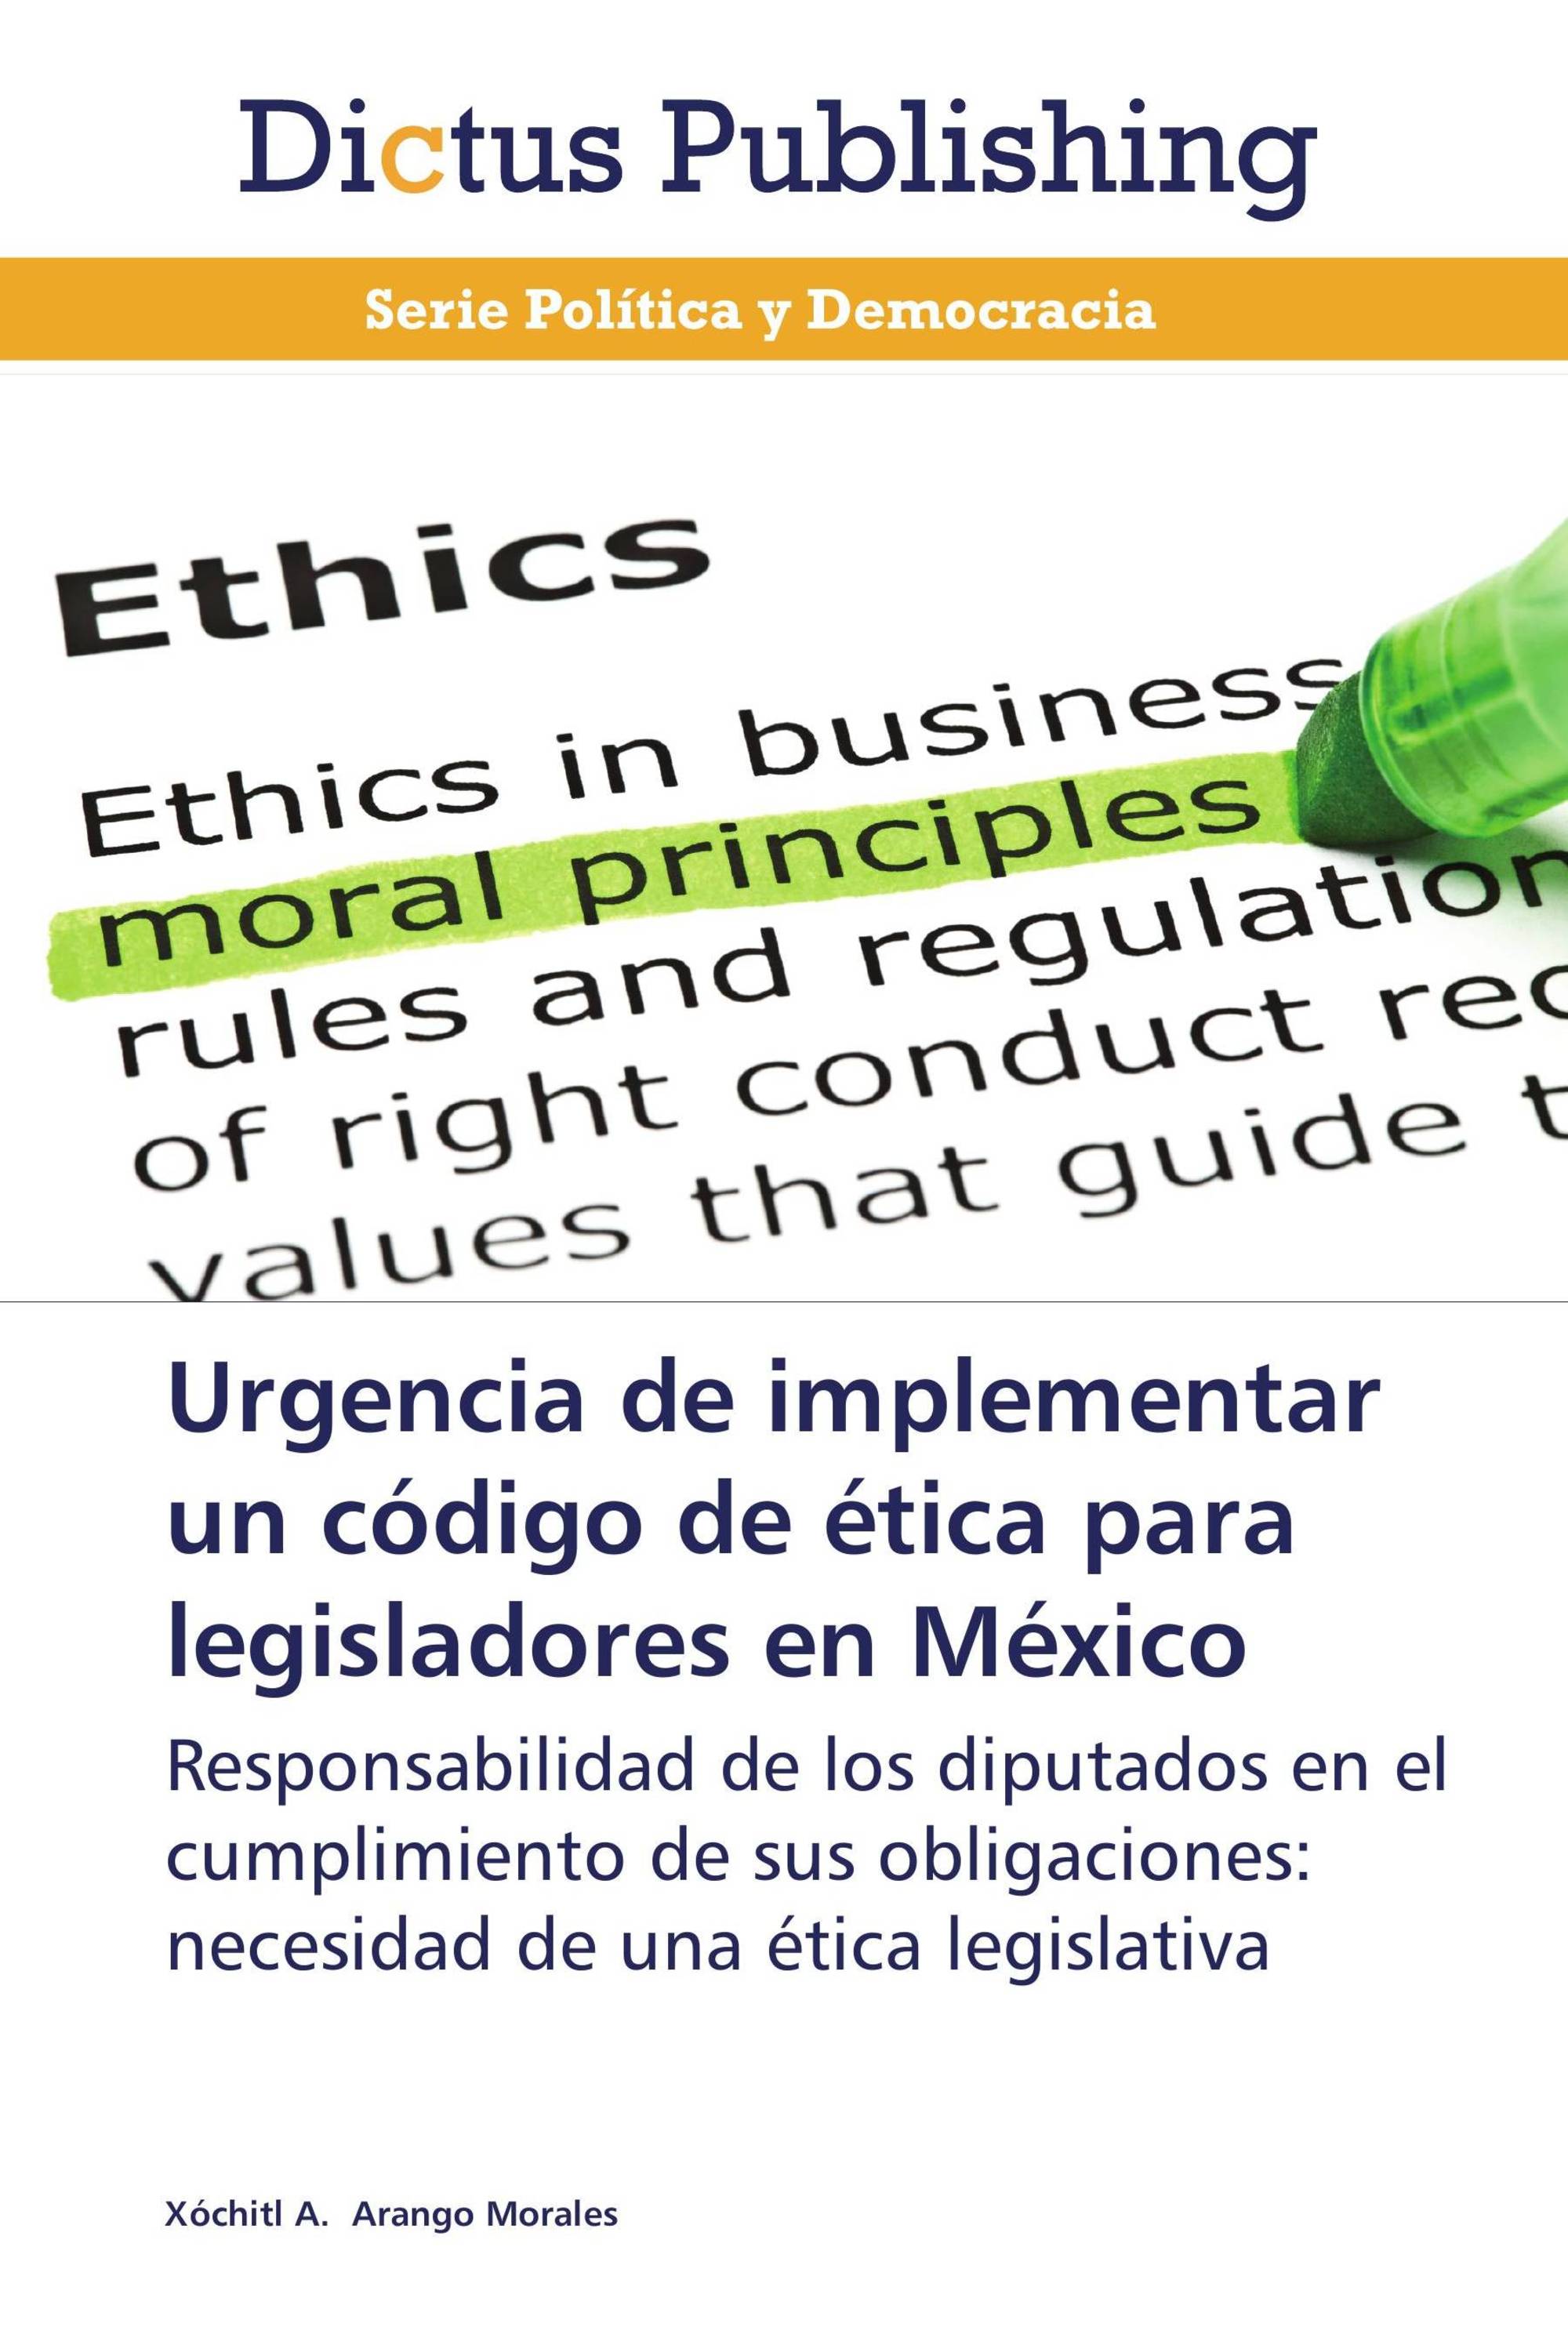 Urgencia de implementar un código de ética para legisladores en México